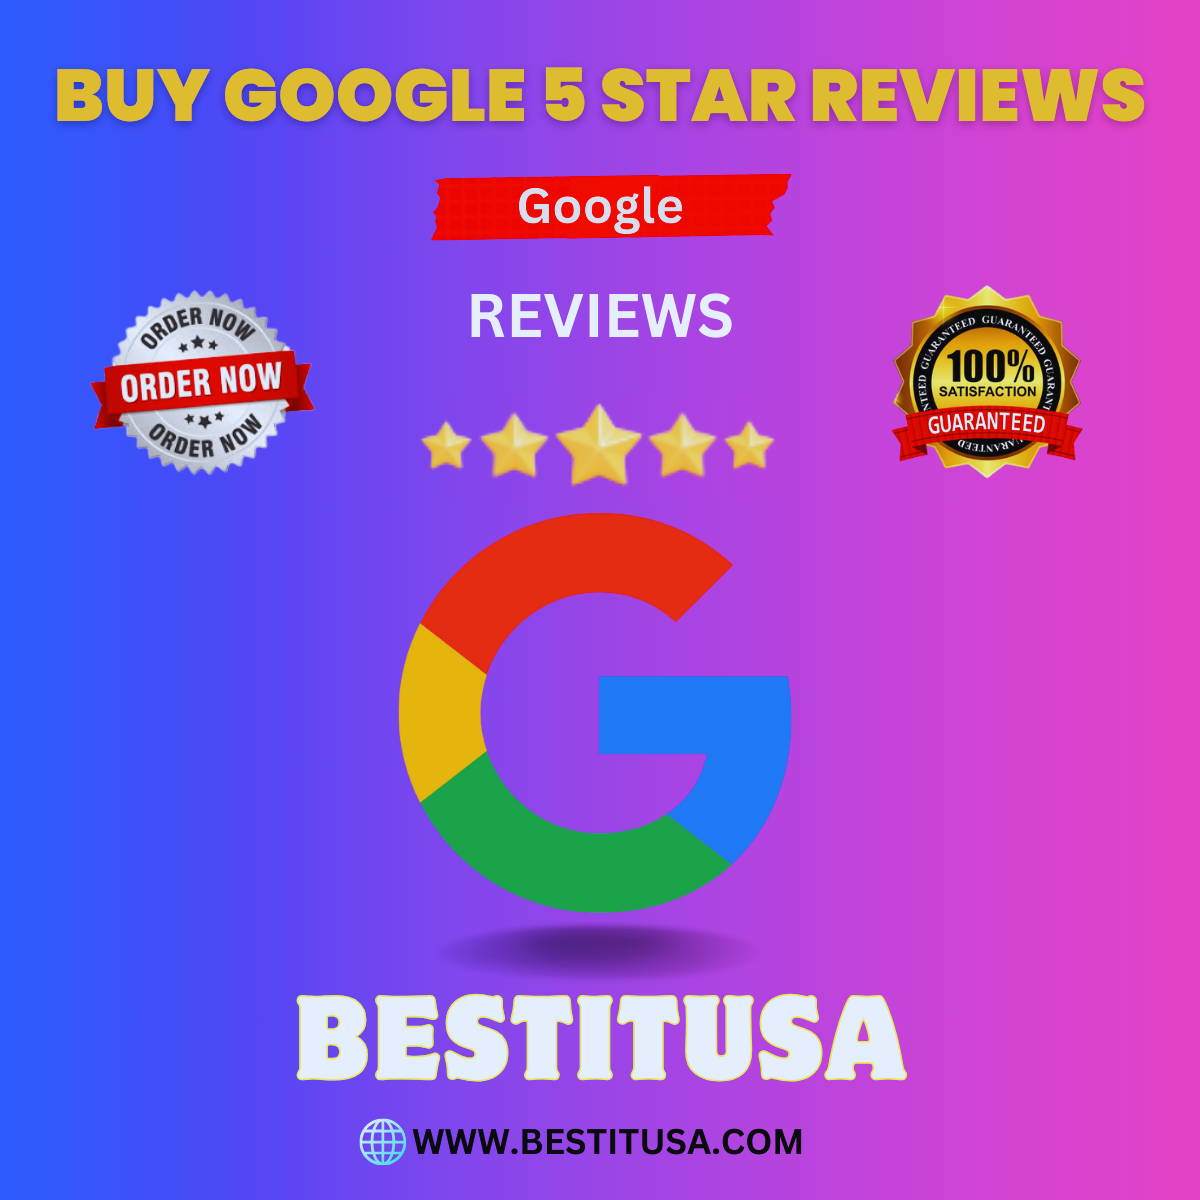 BUY GOOGLE 5 STAR REVIEWS - BestItUsa